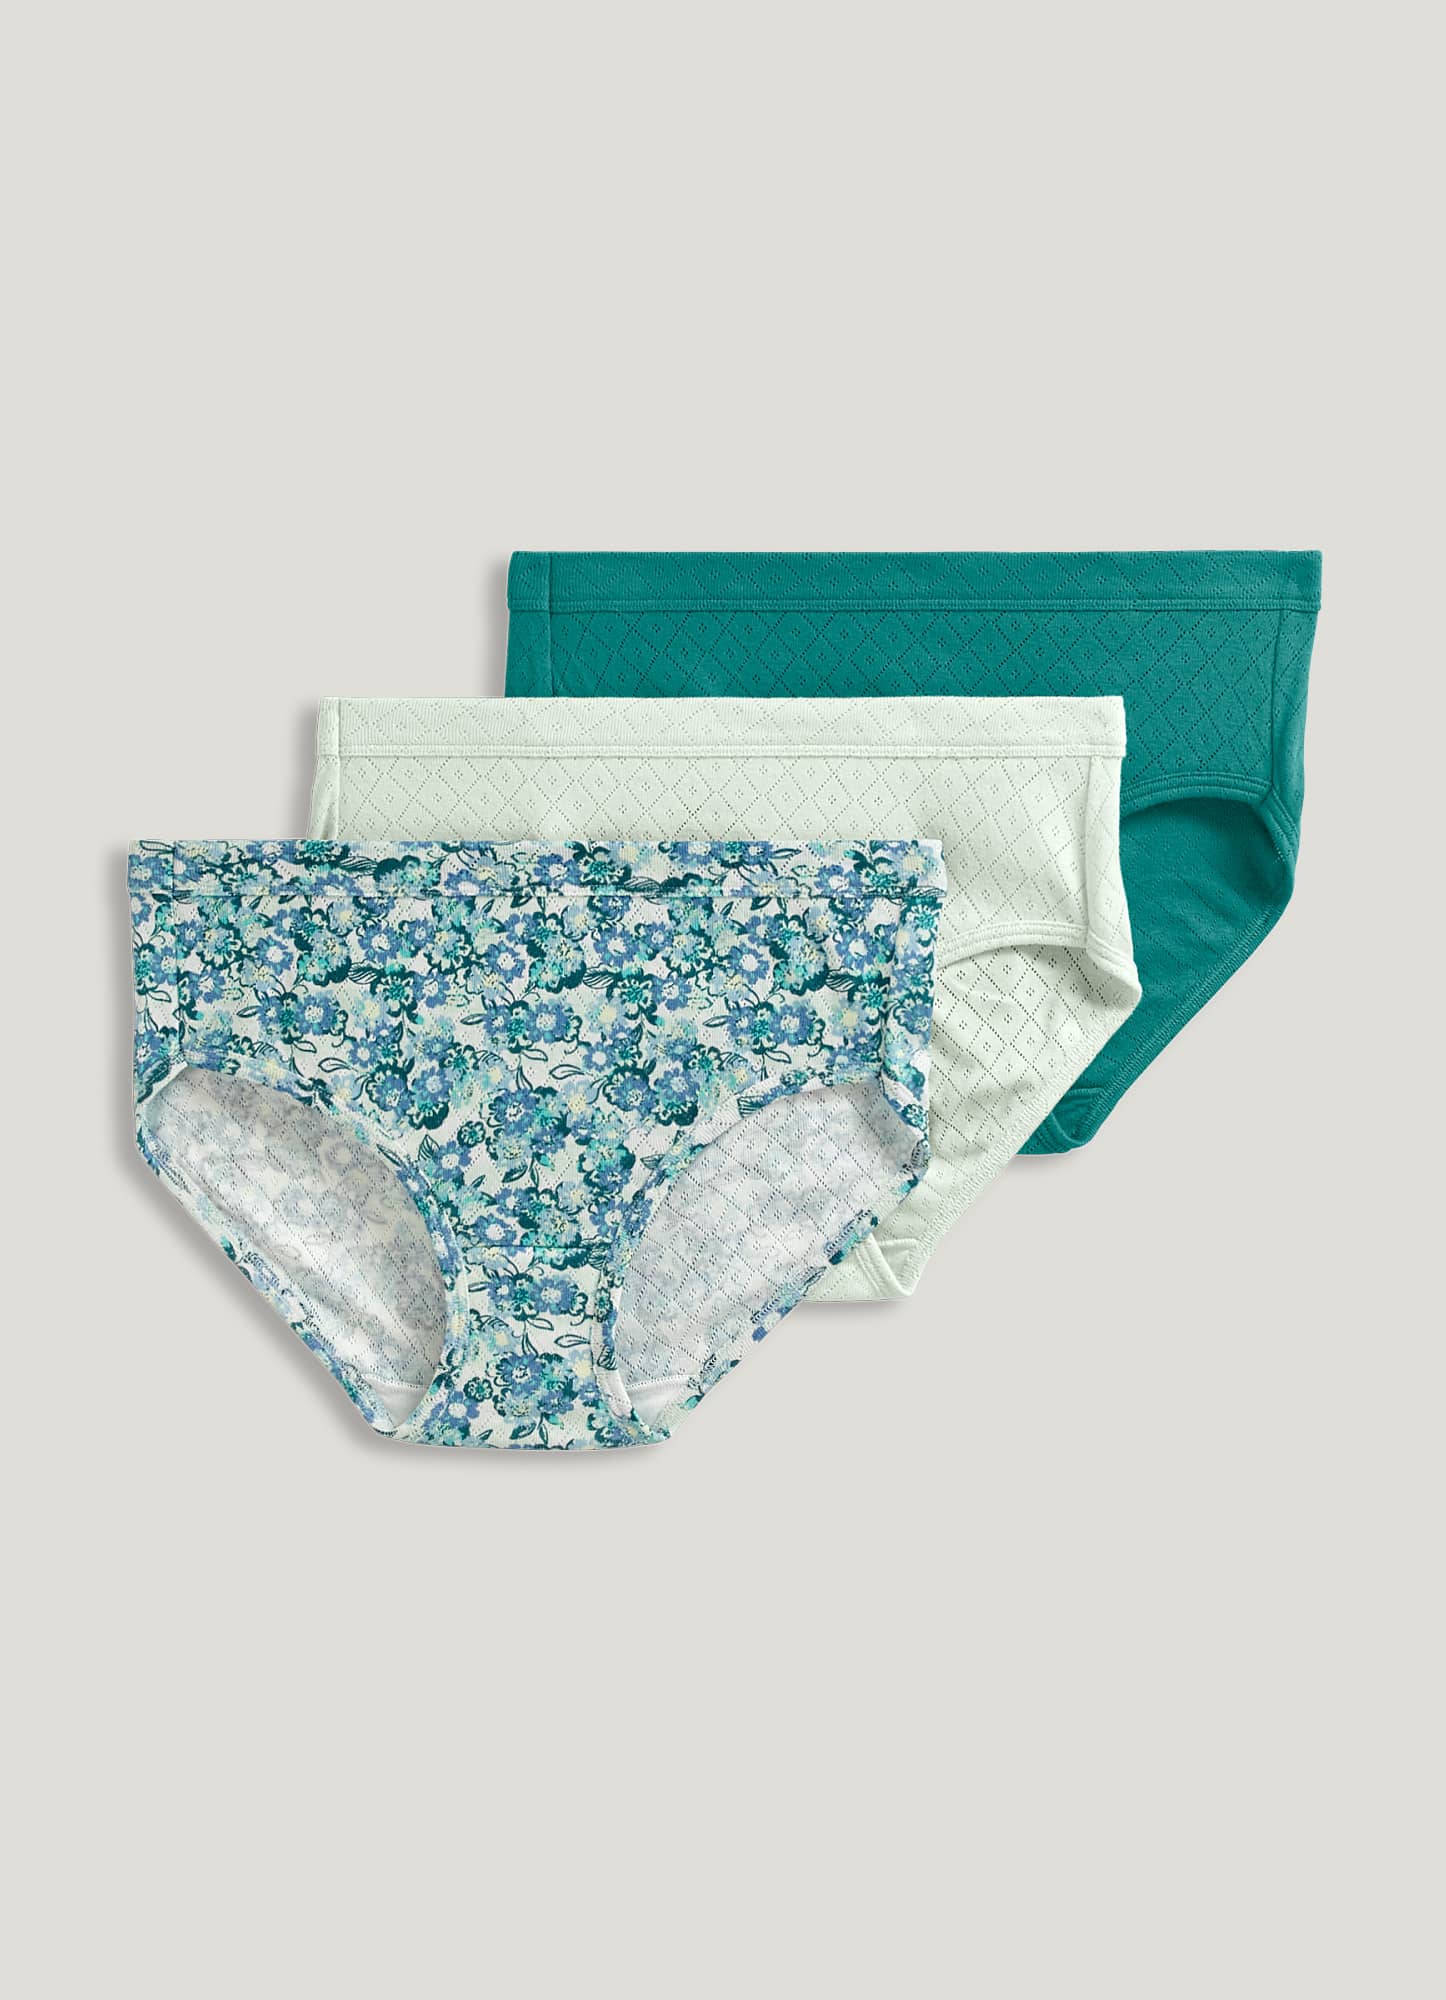 Spdoo Cotton Panties for Women Bikini Underwear Hipster Underpants Lace  Briefs Pack